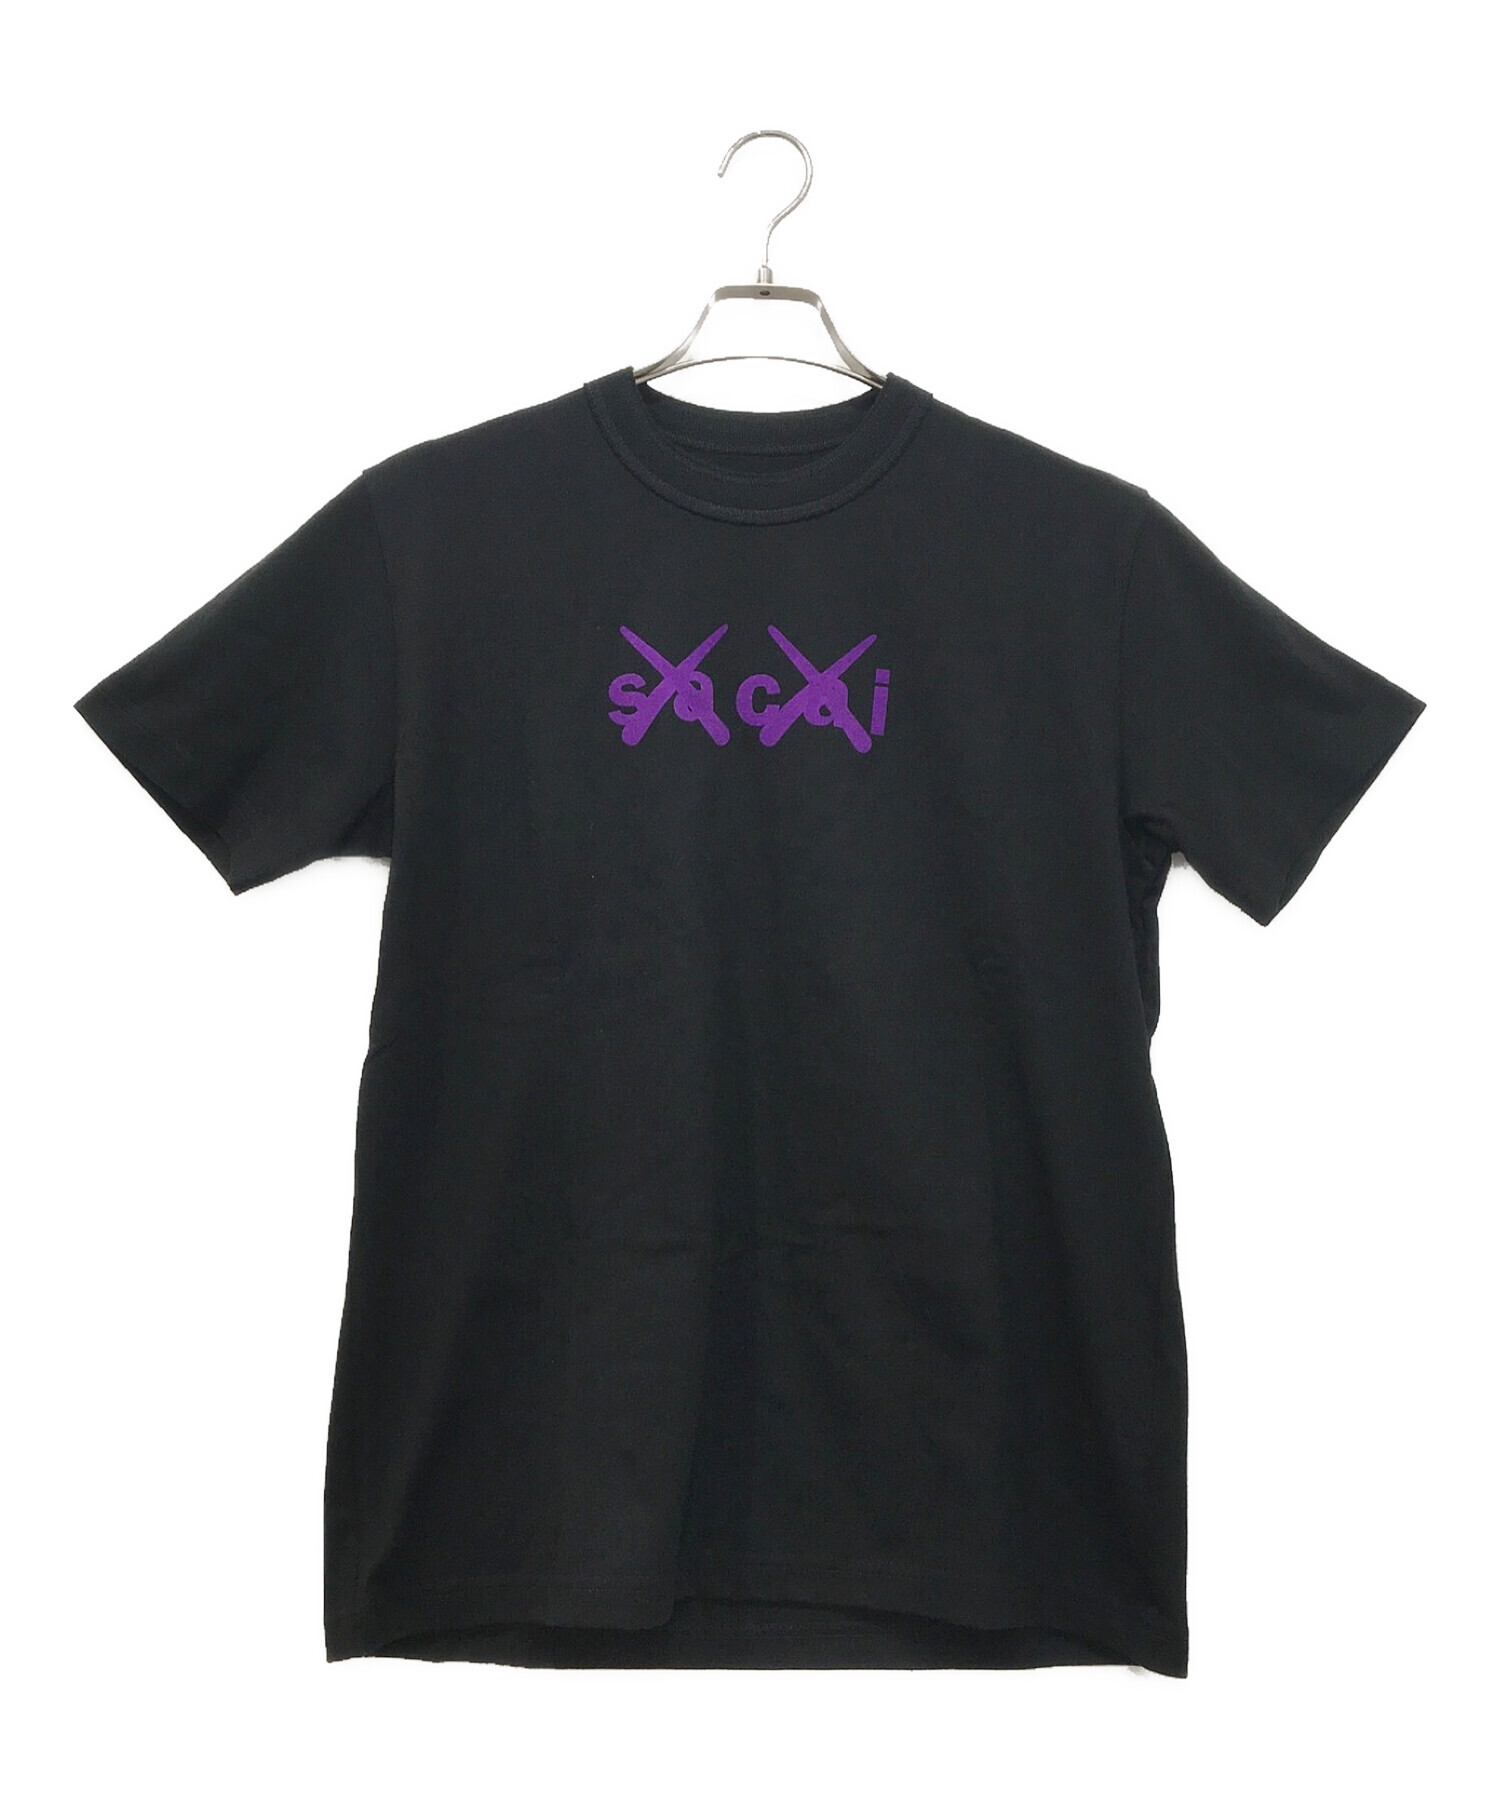 sacai x KAWS / Flock Print T-Shirt サカイ